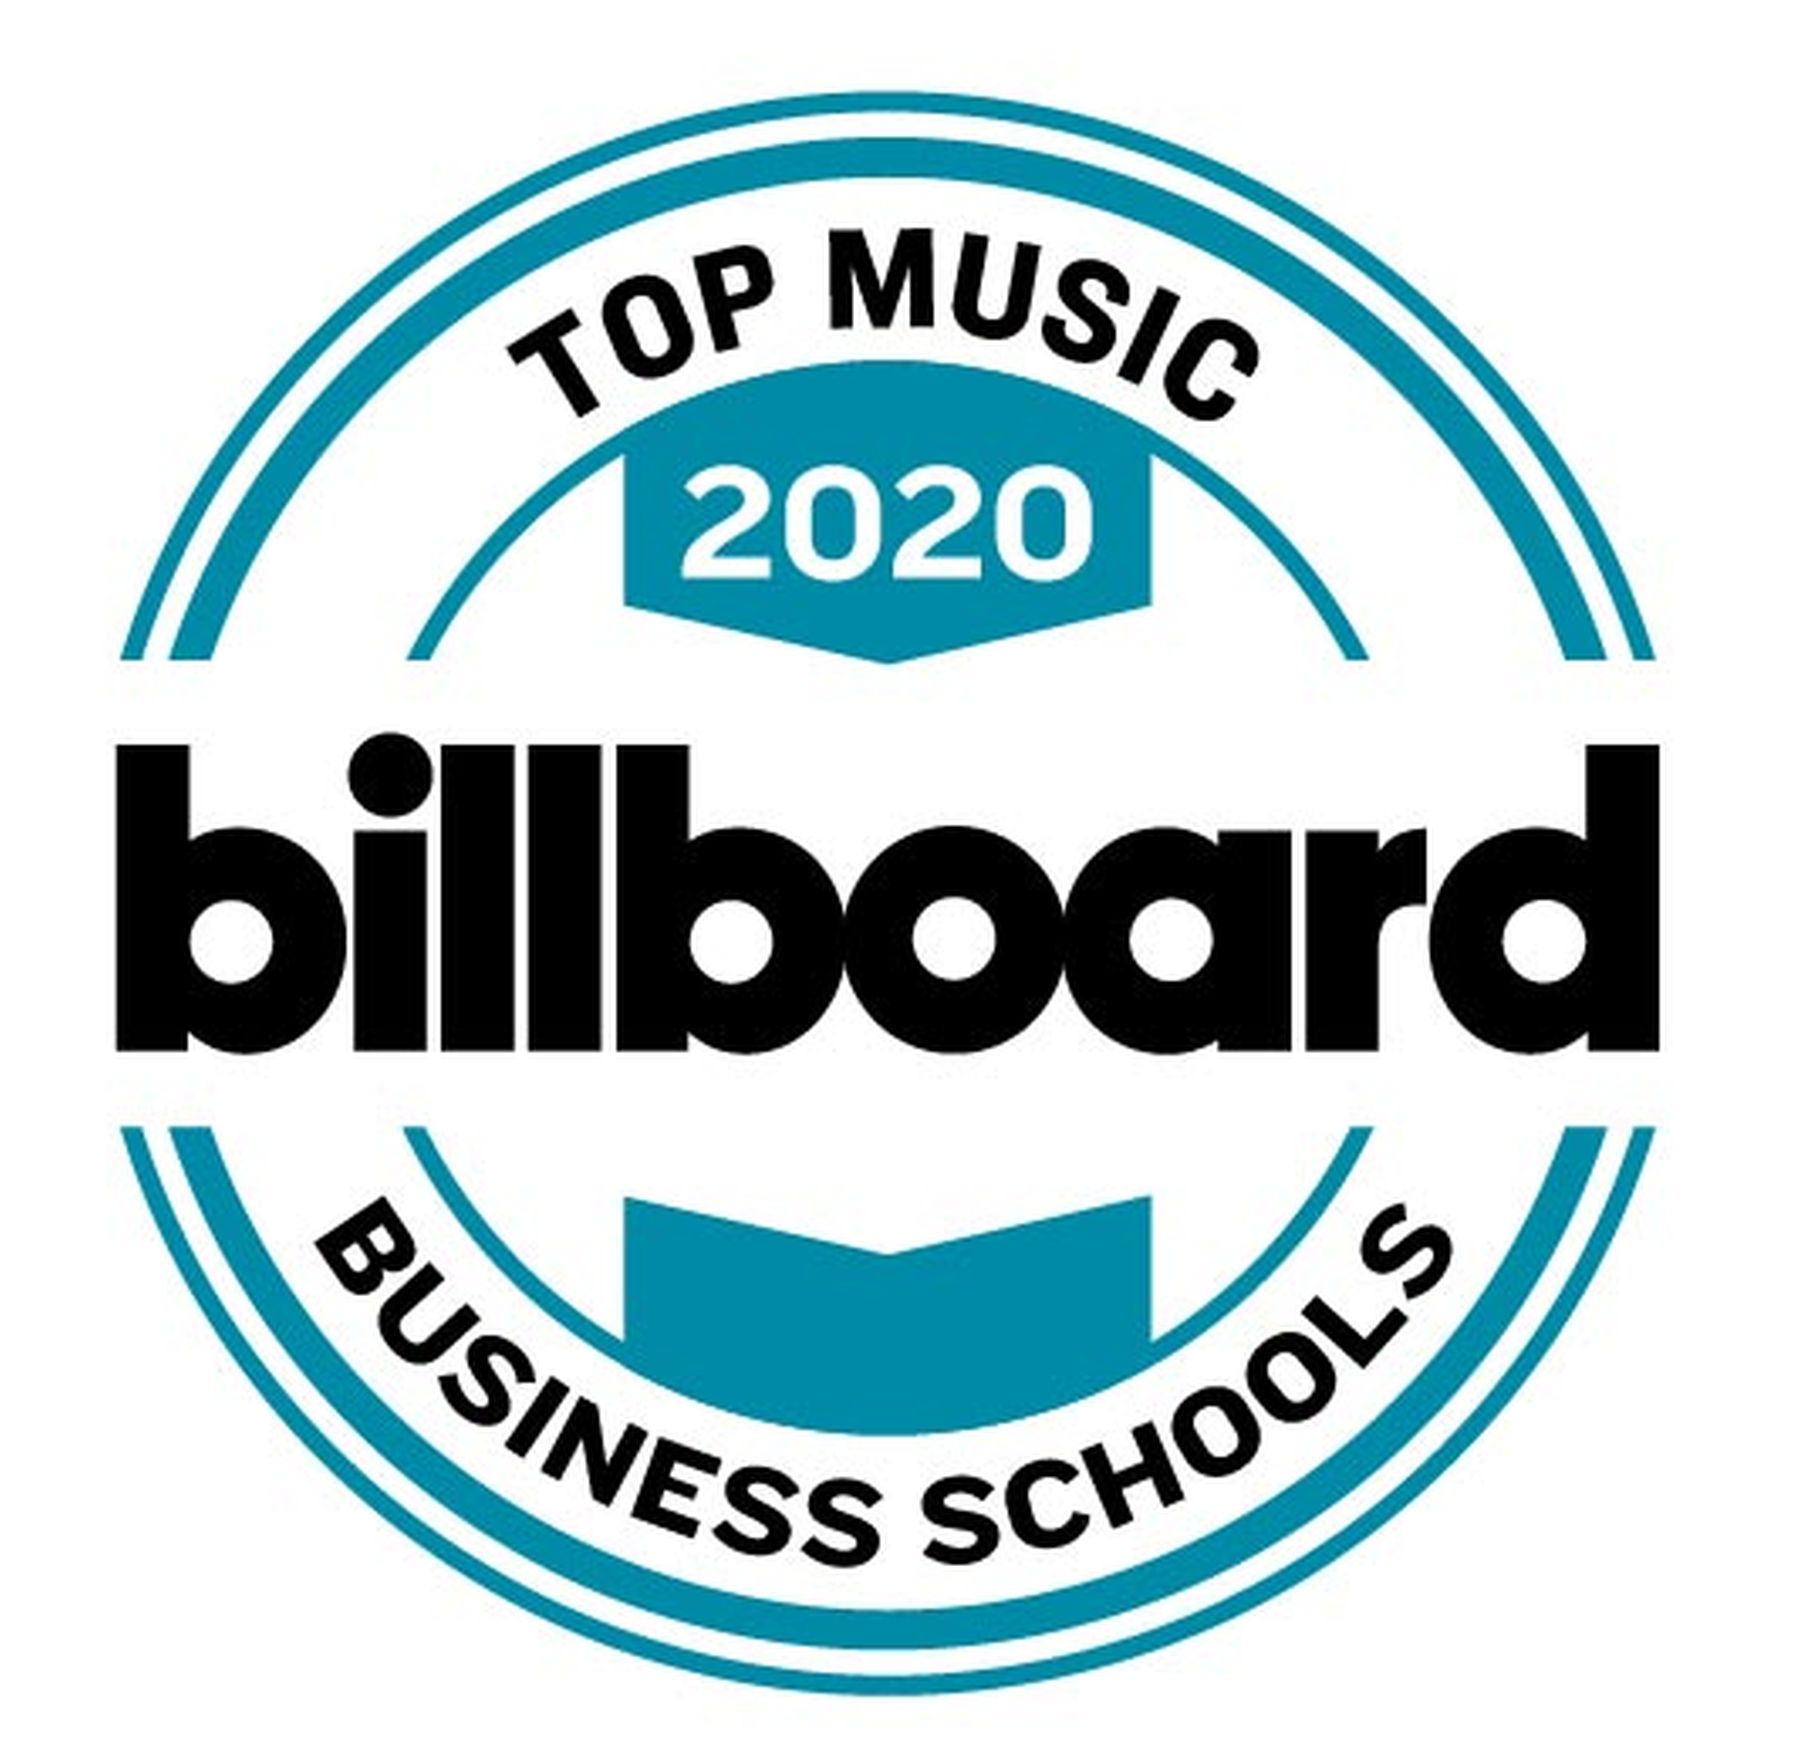 LIPA makes Billboard’s list of top music business schools